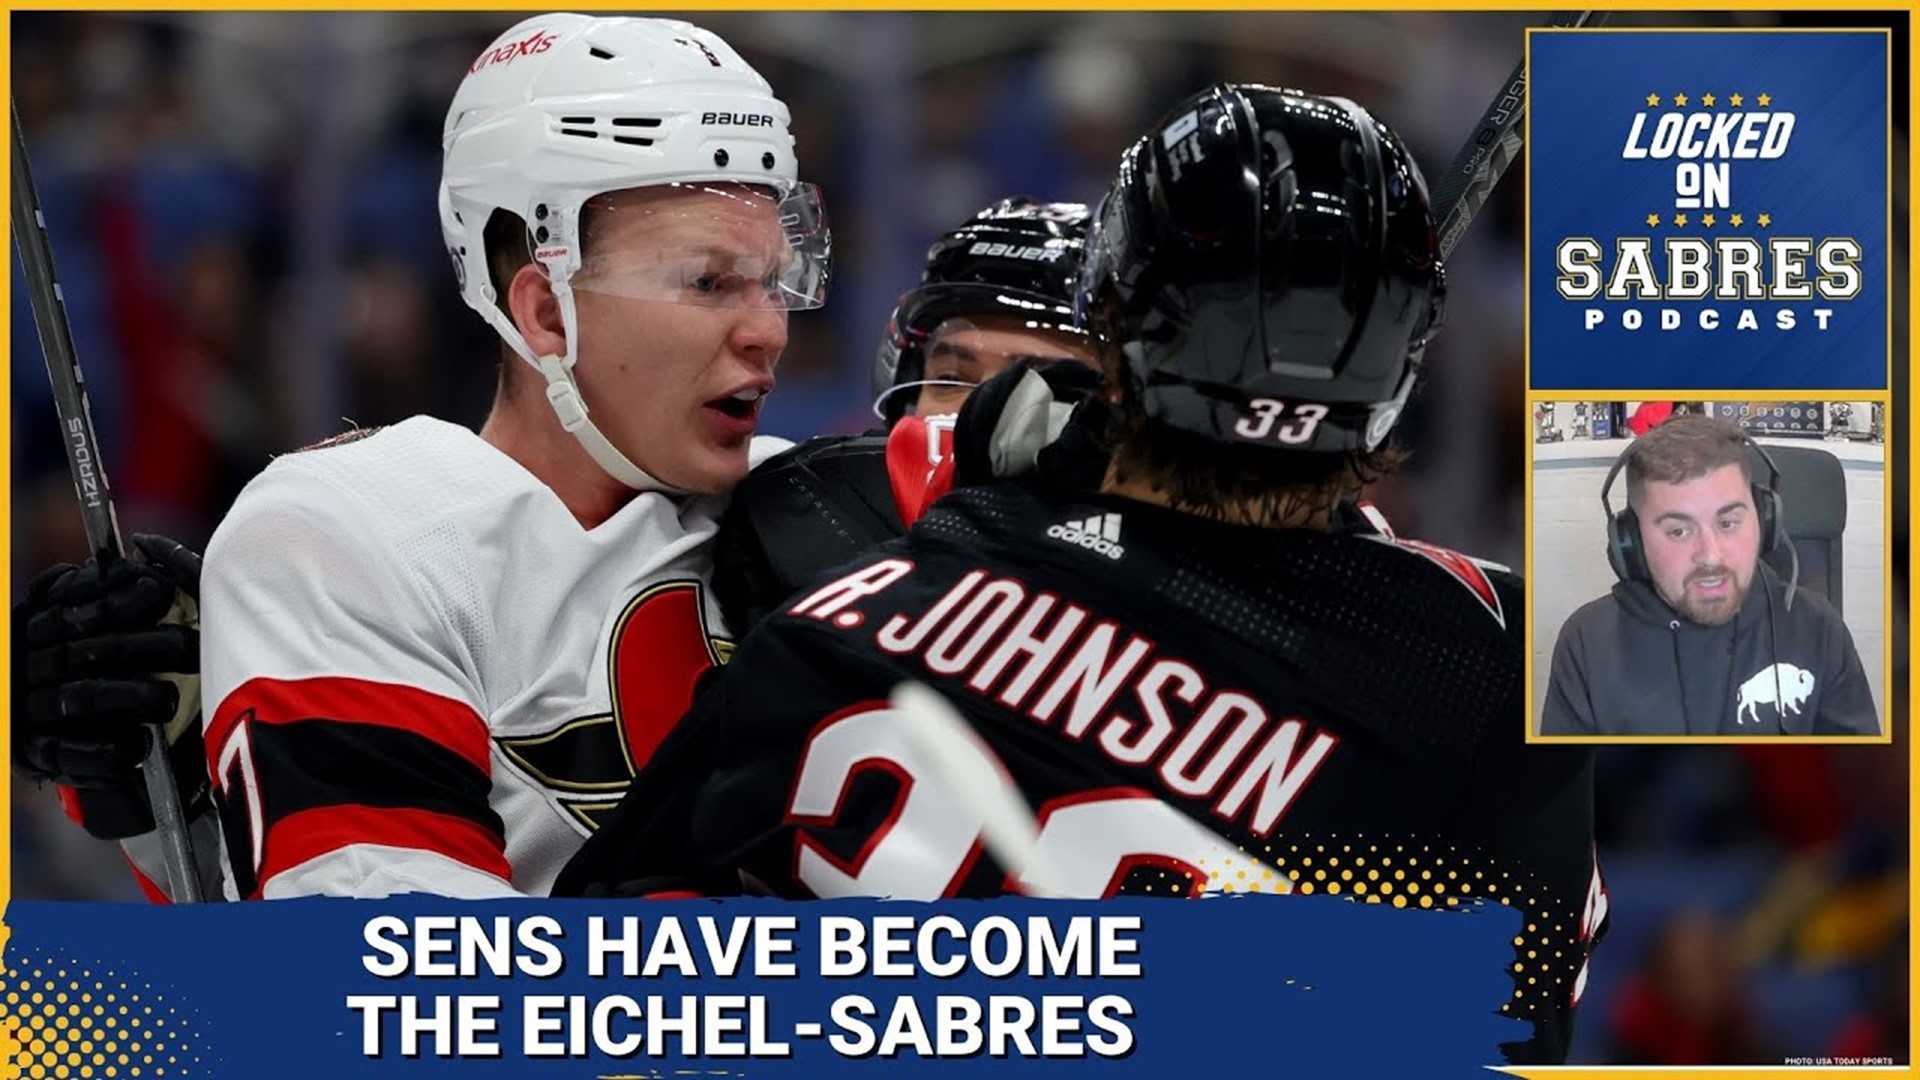 Senators have become the Eichel-Sabres